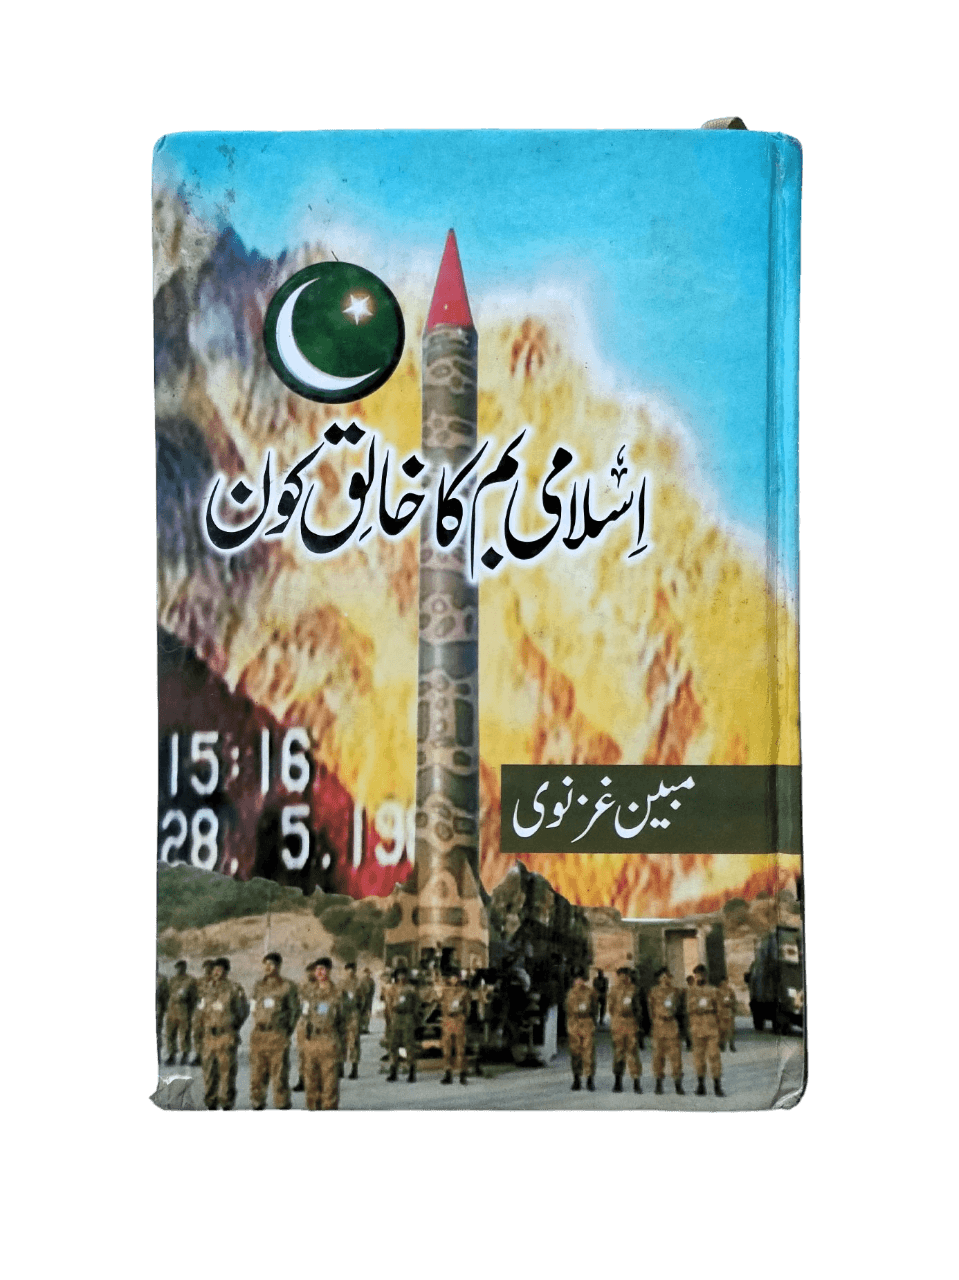 Islami Bomb ka khaliq kon? (Who Created the Islamic Bomb?) - KHAJISTAN™